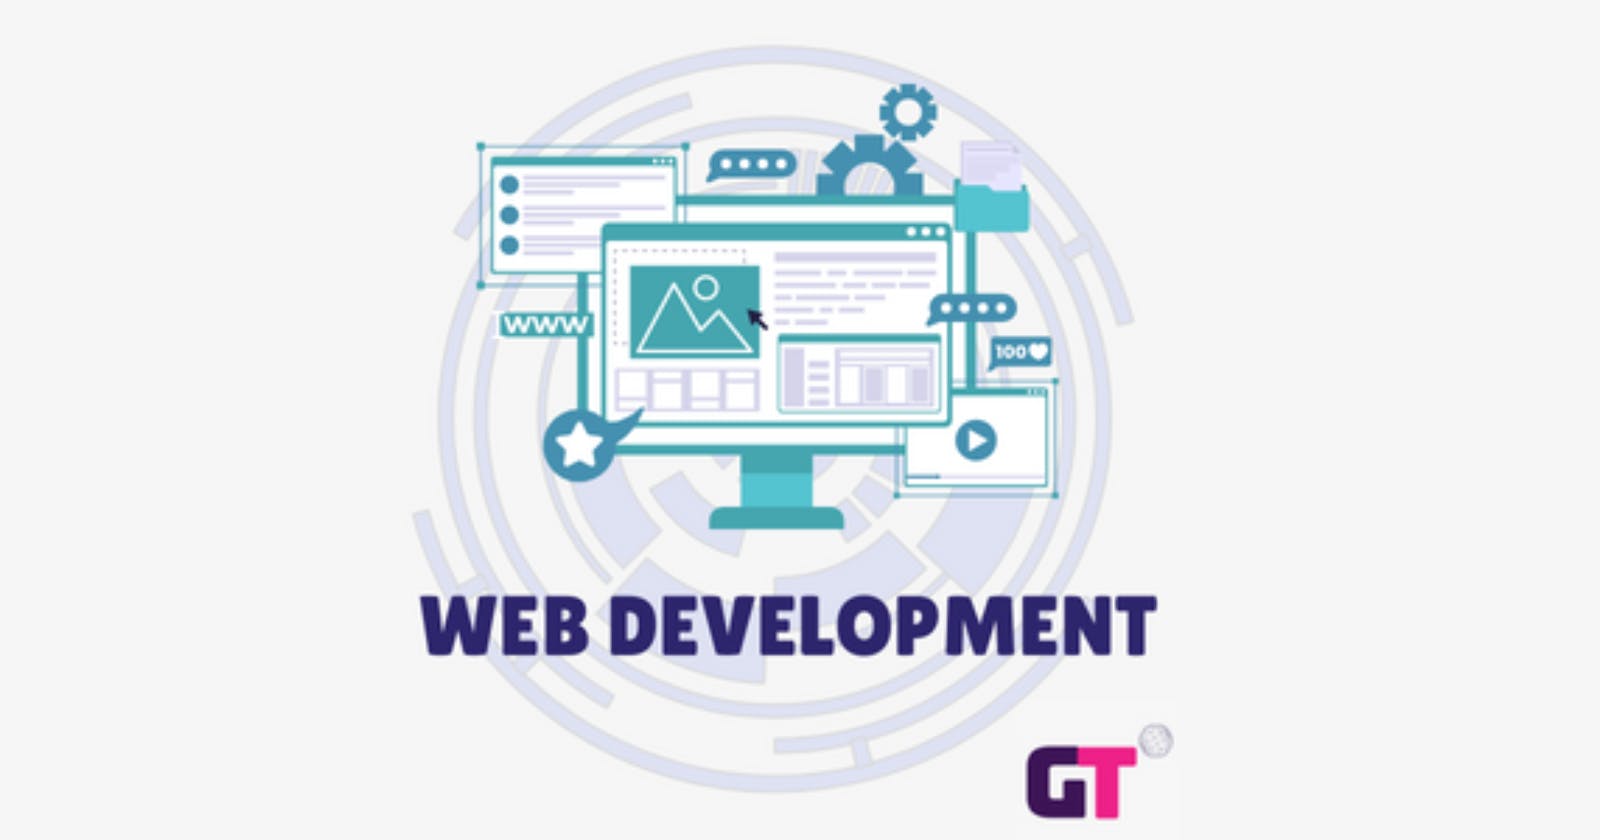 ABCs of Web development